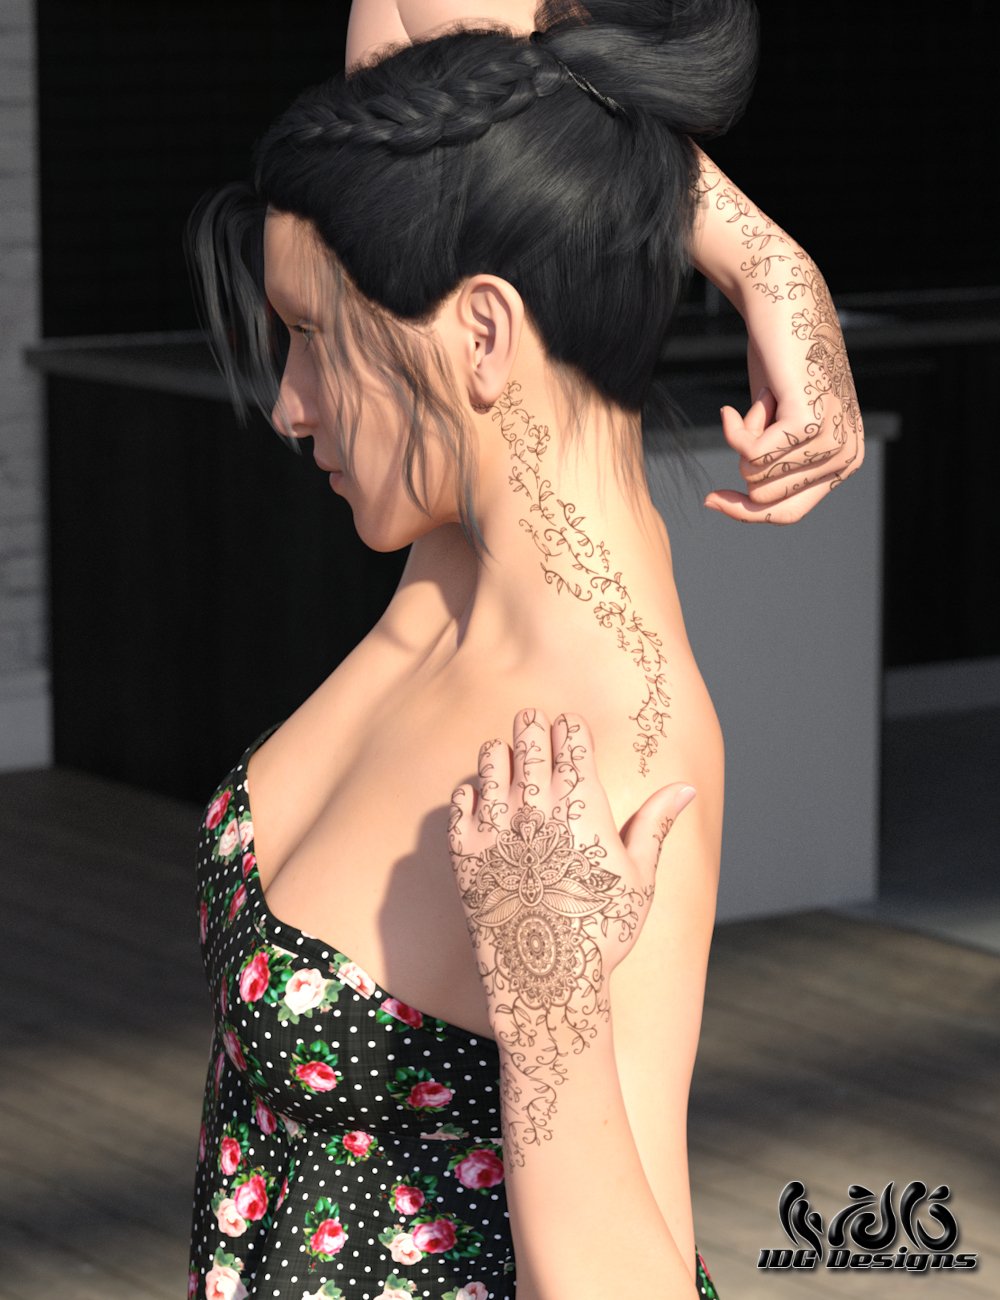 IDG Henna Tattoos for Kala 8 and Genesis 8 Female(s) by: DestinysGardenInaneGlory, 3D Models by Daz 3D